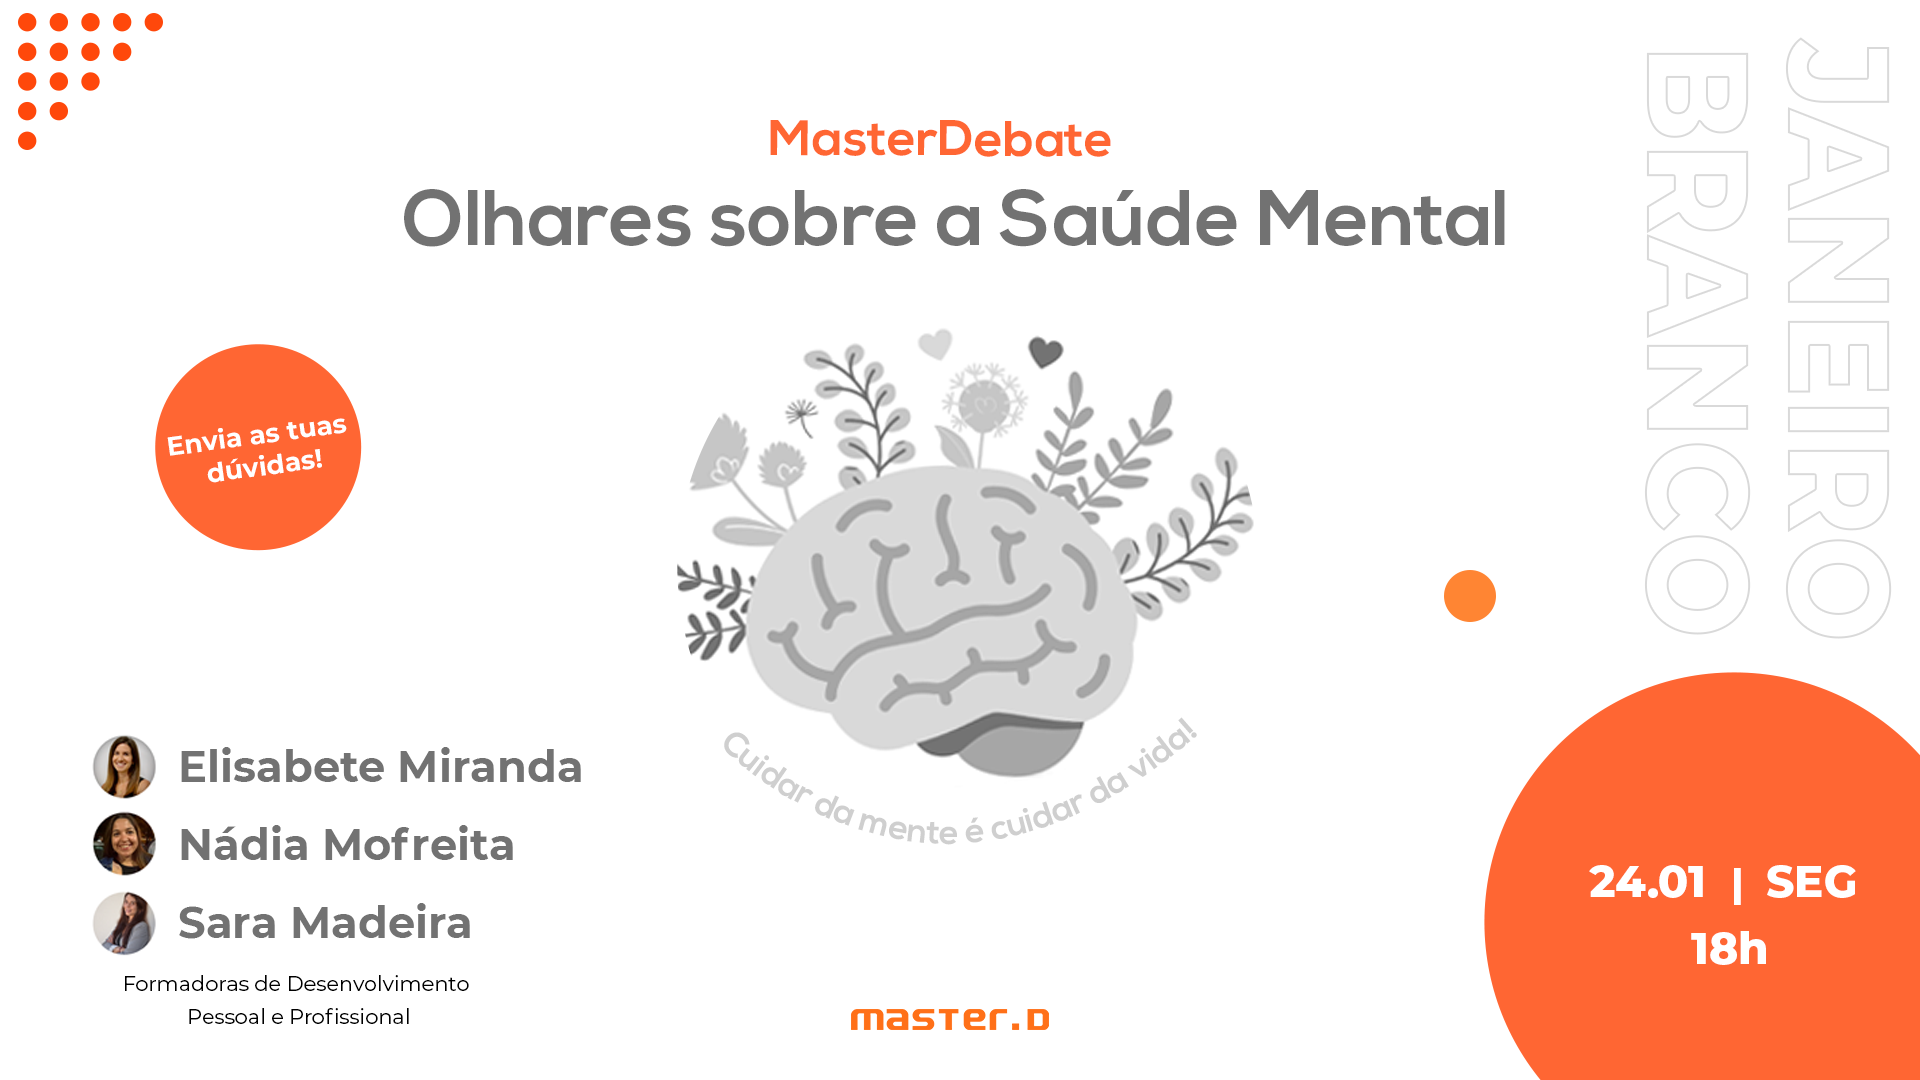 Master D Lisboa – Janeiro Branco: Vamos falar sobre Saúde Mental?